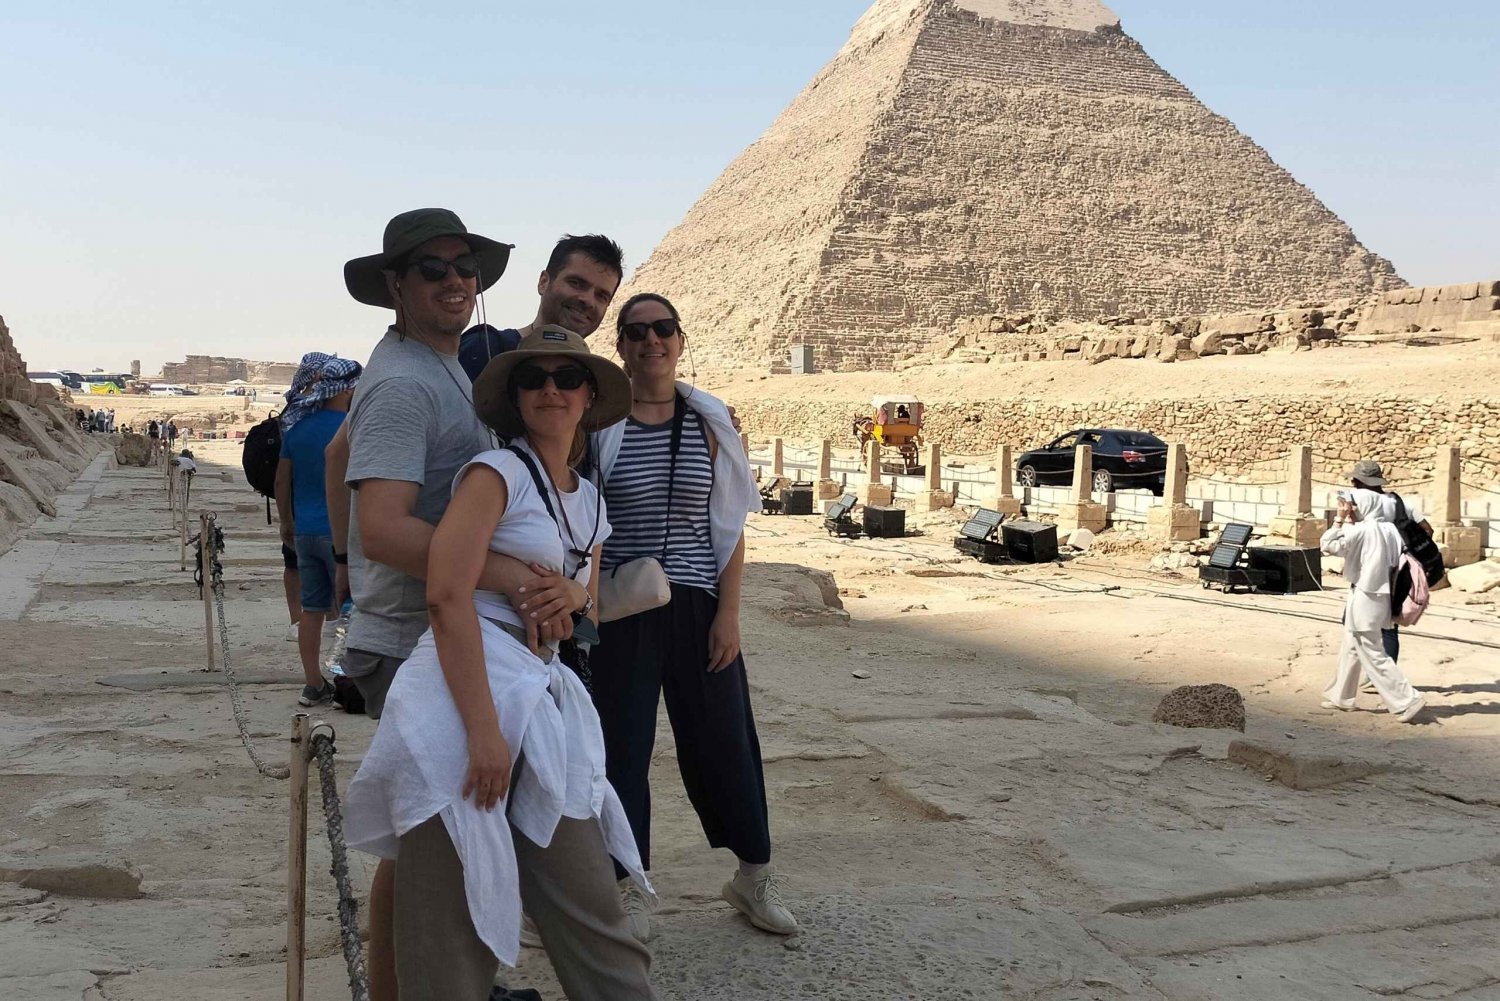 Piramides van Gizeh, mummiemuseum en bazaar privé dagtour